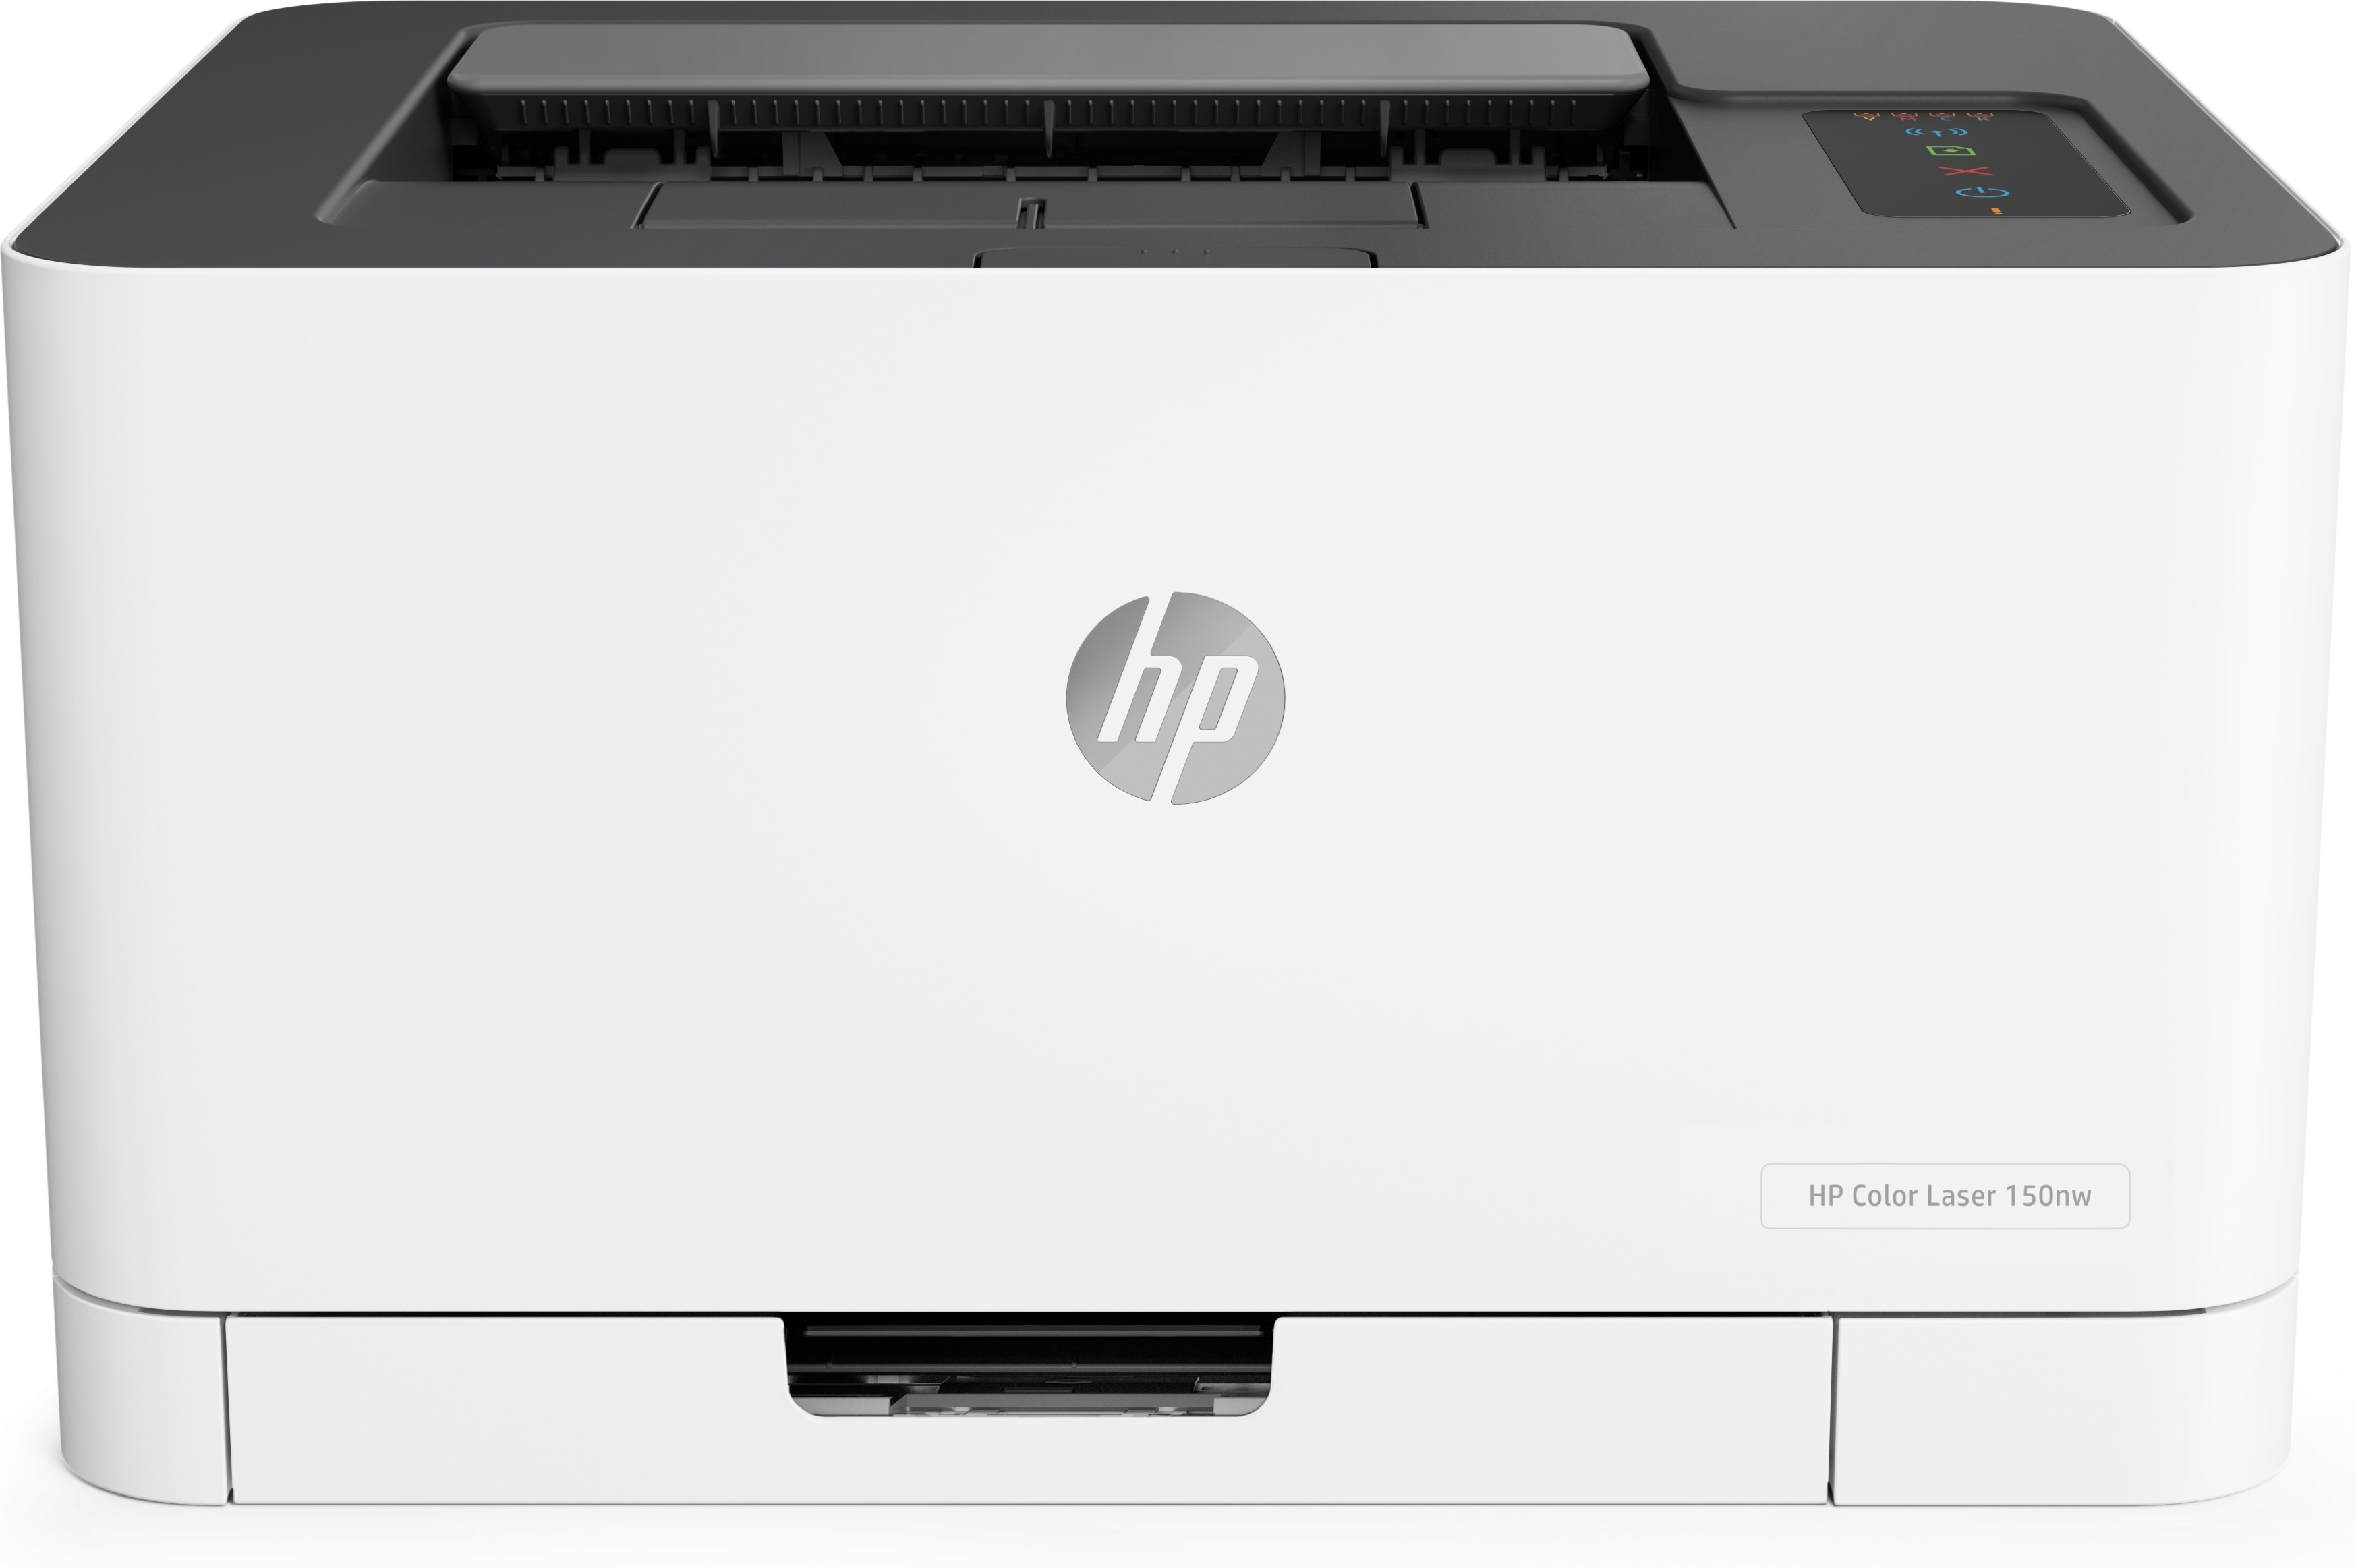 HP COLOR LASER 150nw STAMPANTE A COLORI A4 WI-FI 600 X DPI [4ZB95A#B19]